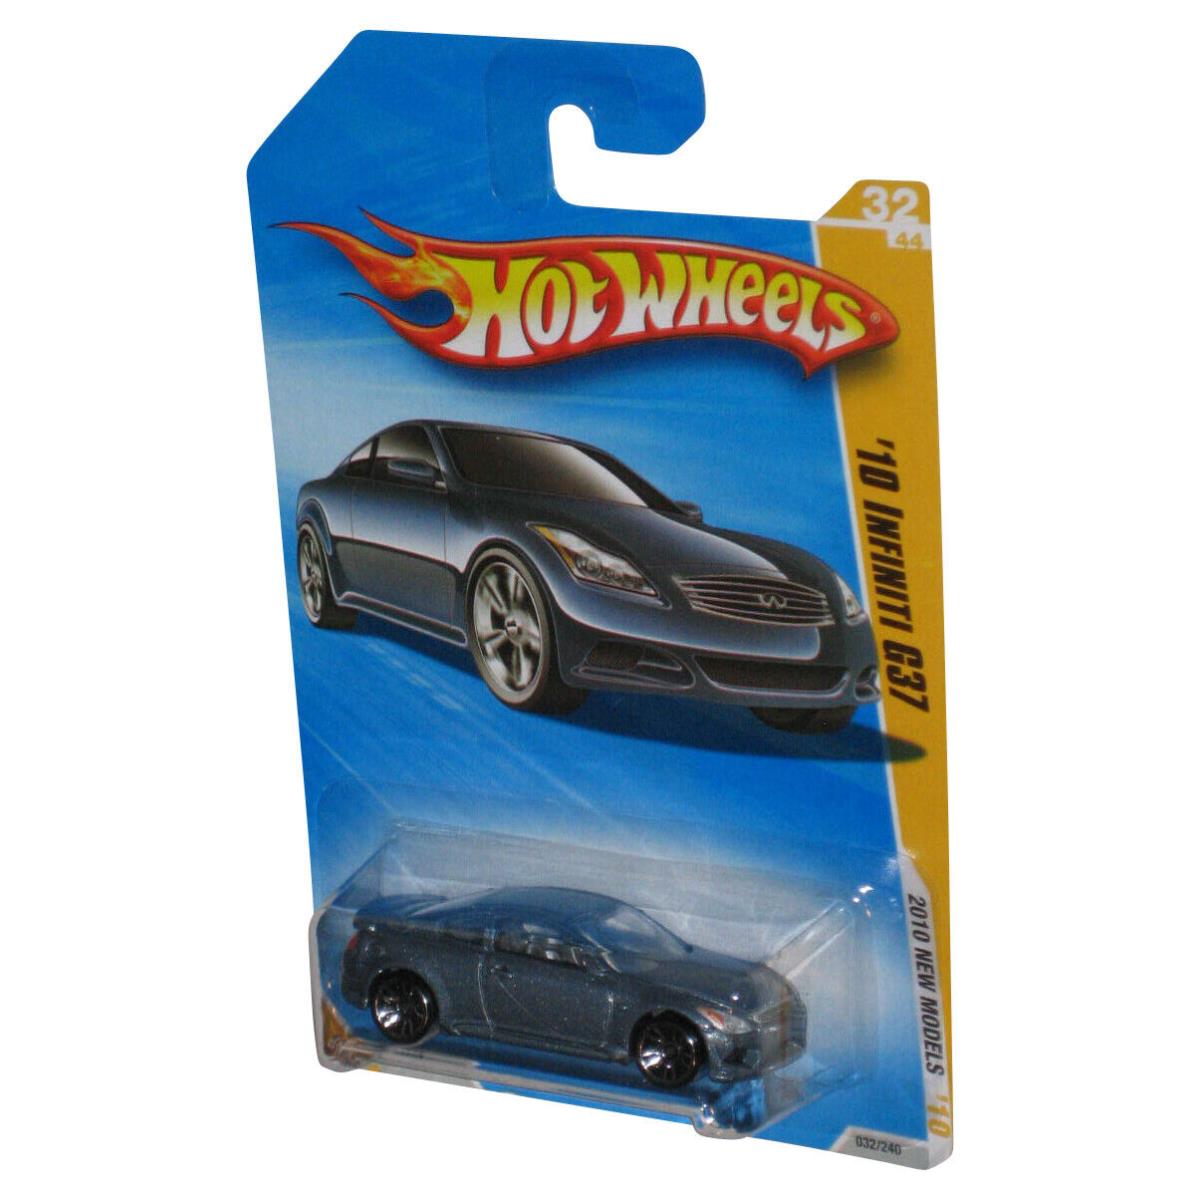 Hot Wheels 2010 Models 32/44 Blue `10 Infiniti G37 Toy Car 032/240